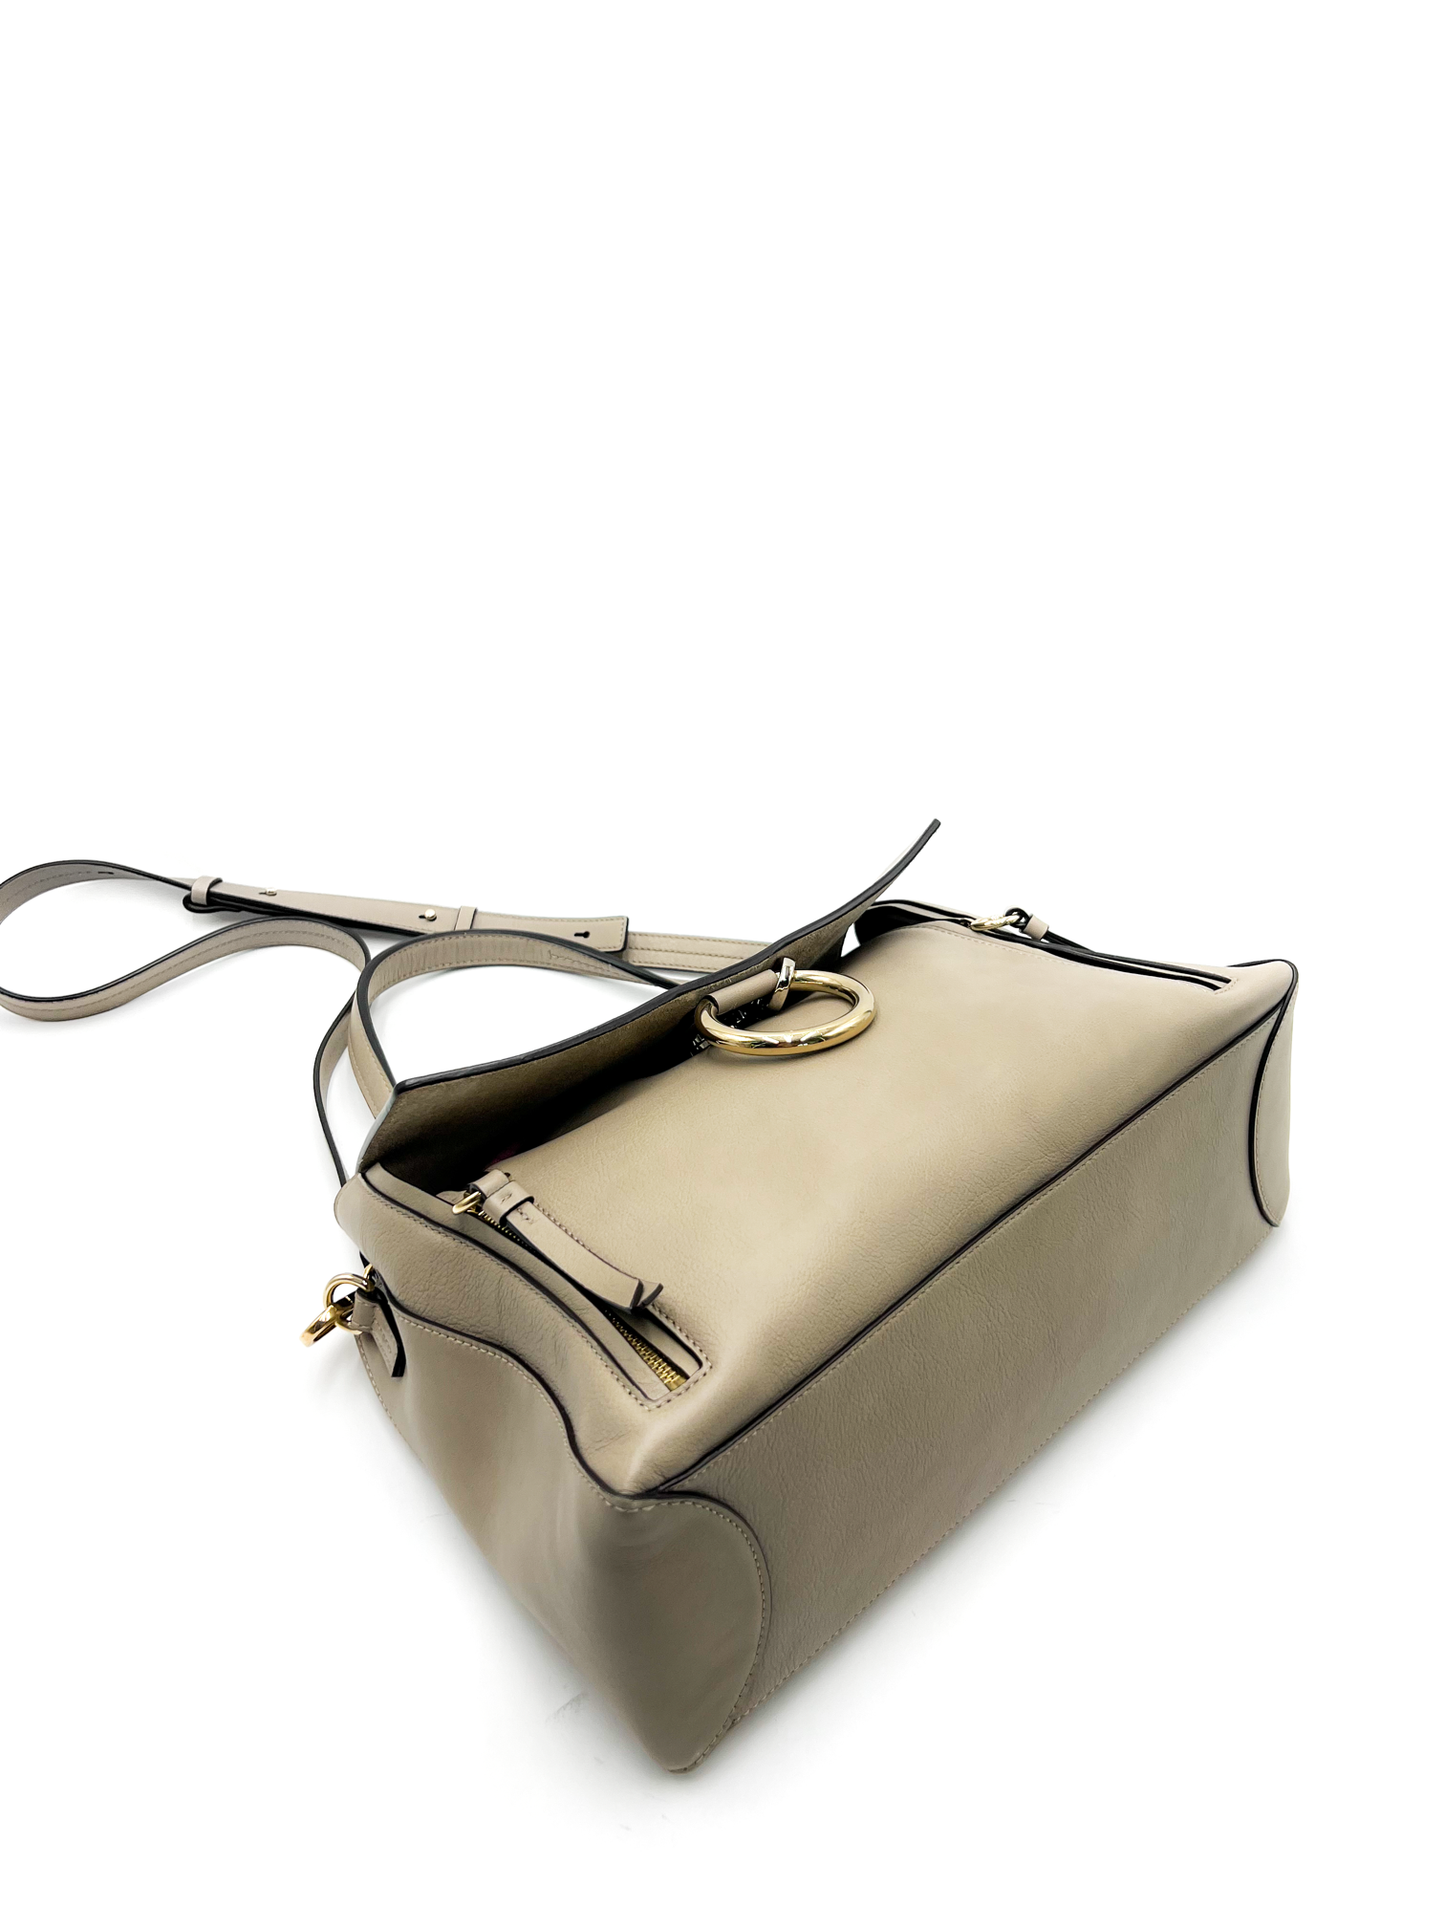 Chloé Leather Day Bag